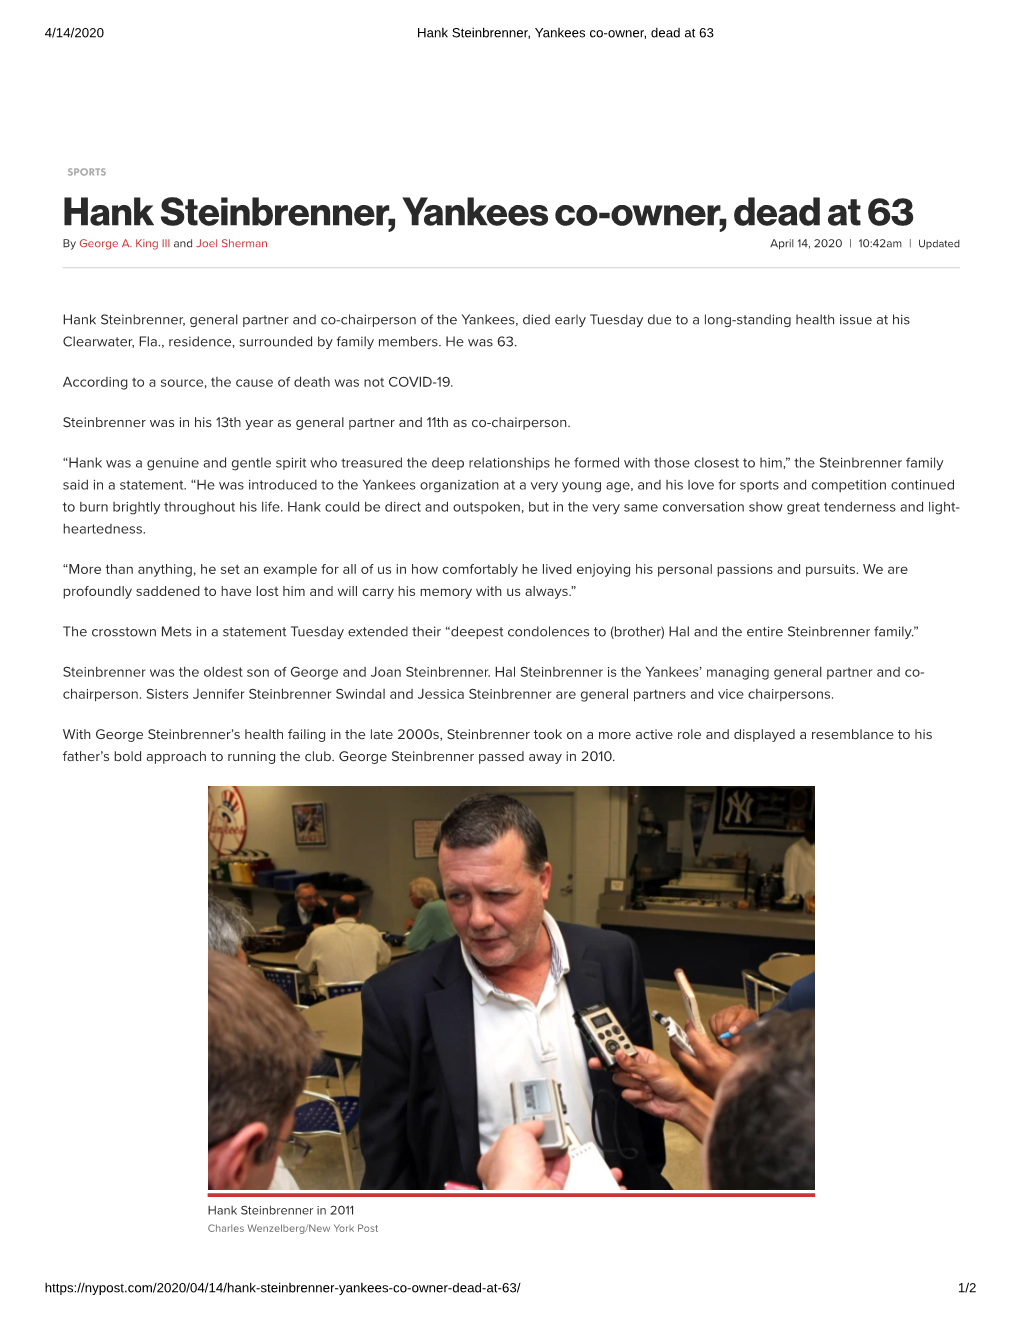 Hank Steinbrenner, Yankees Co-Owner, Dead at 63